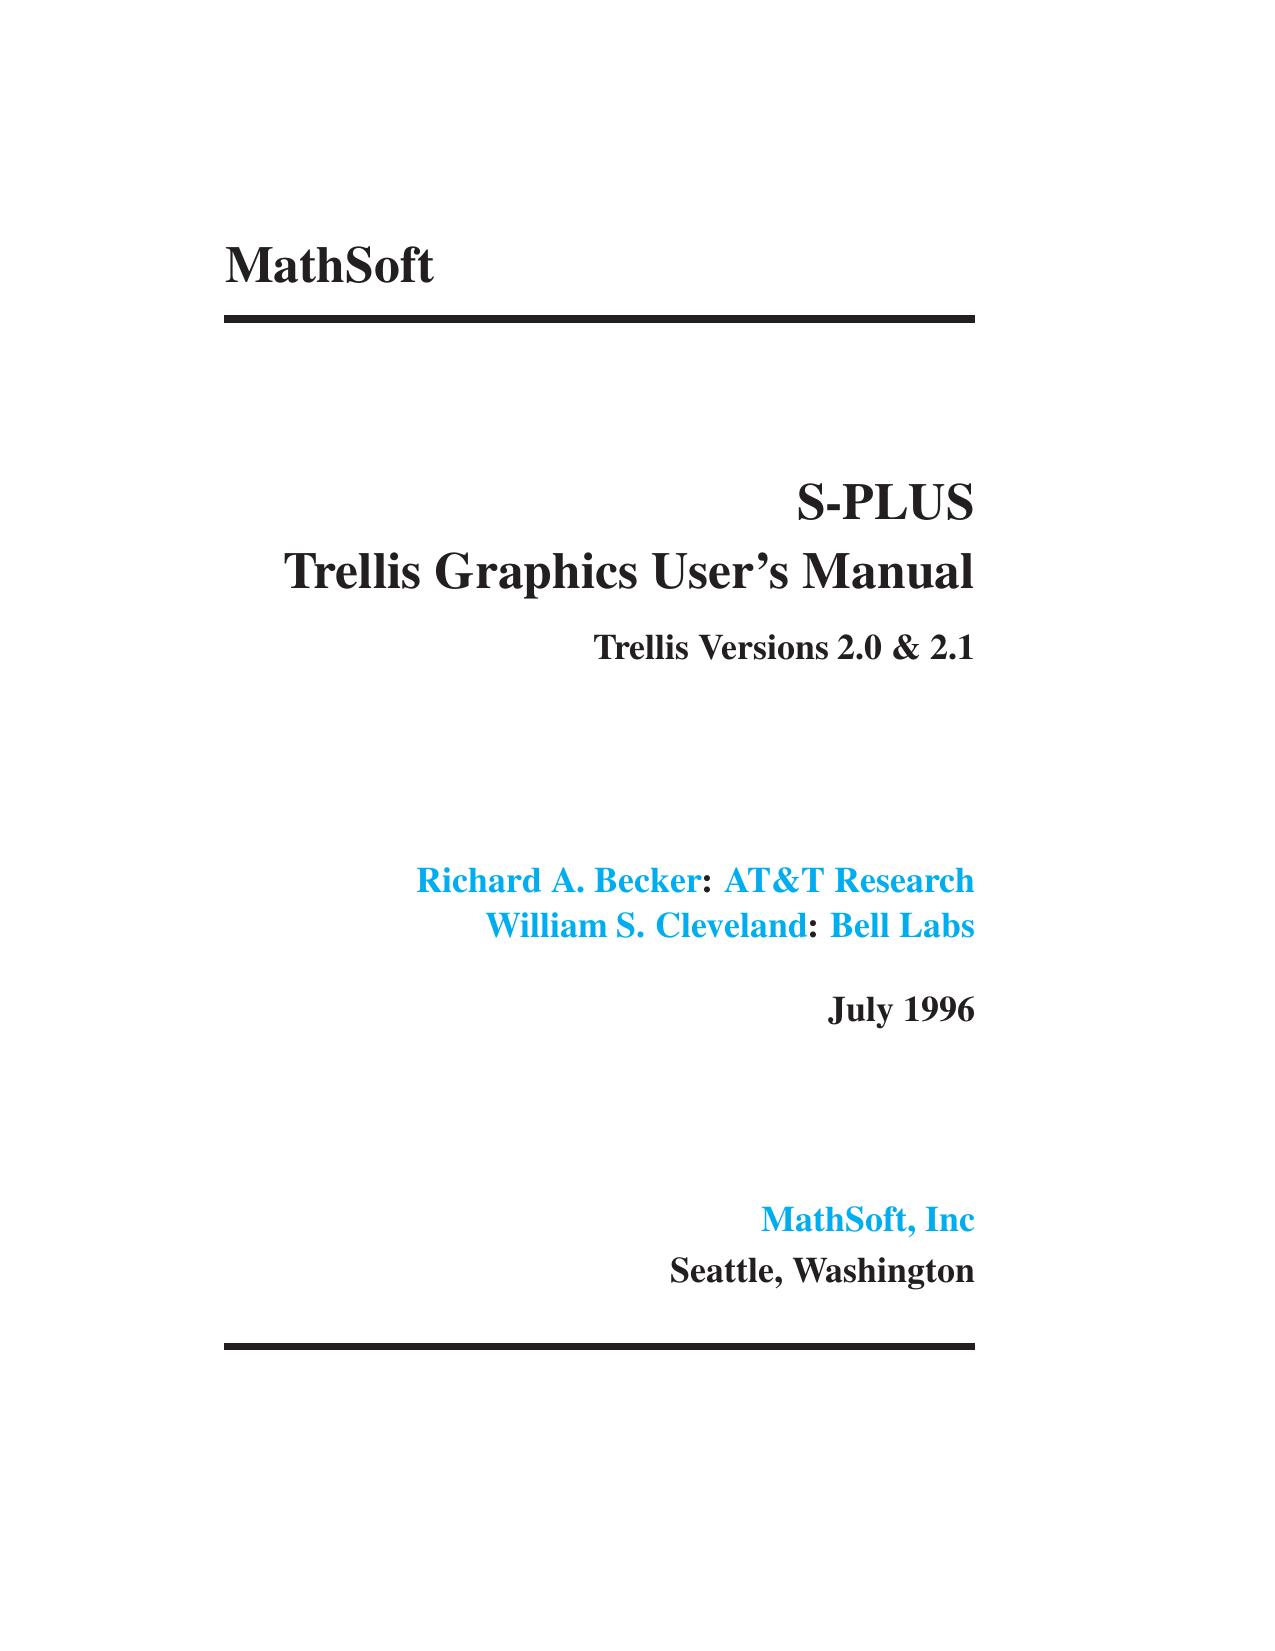 Trellis Graphics -- User Manual